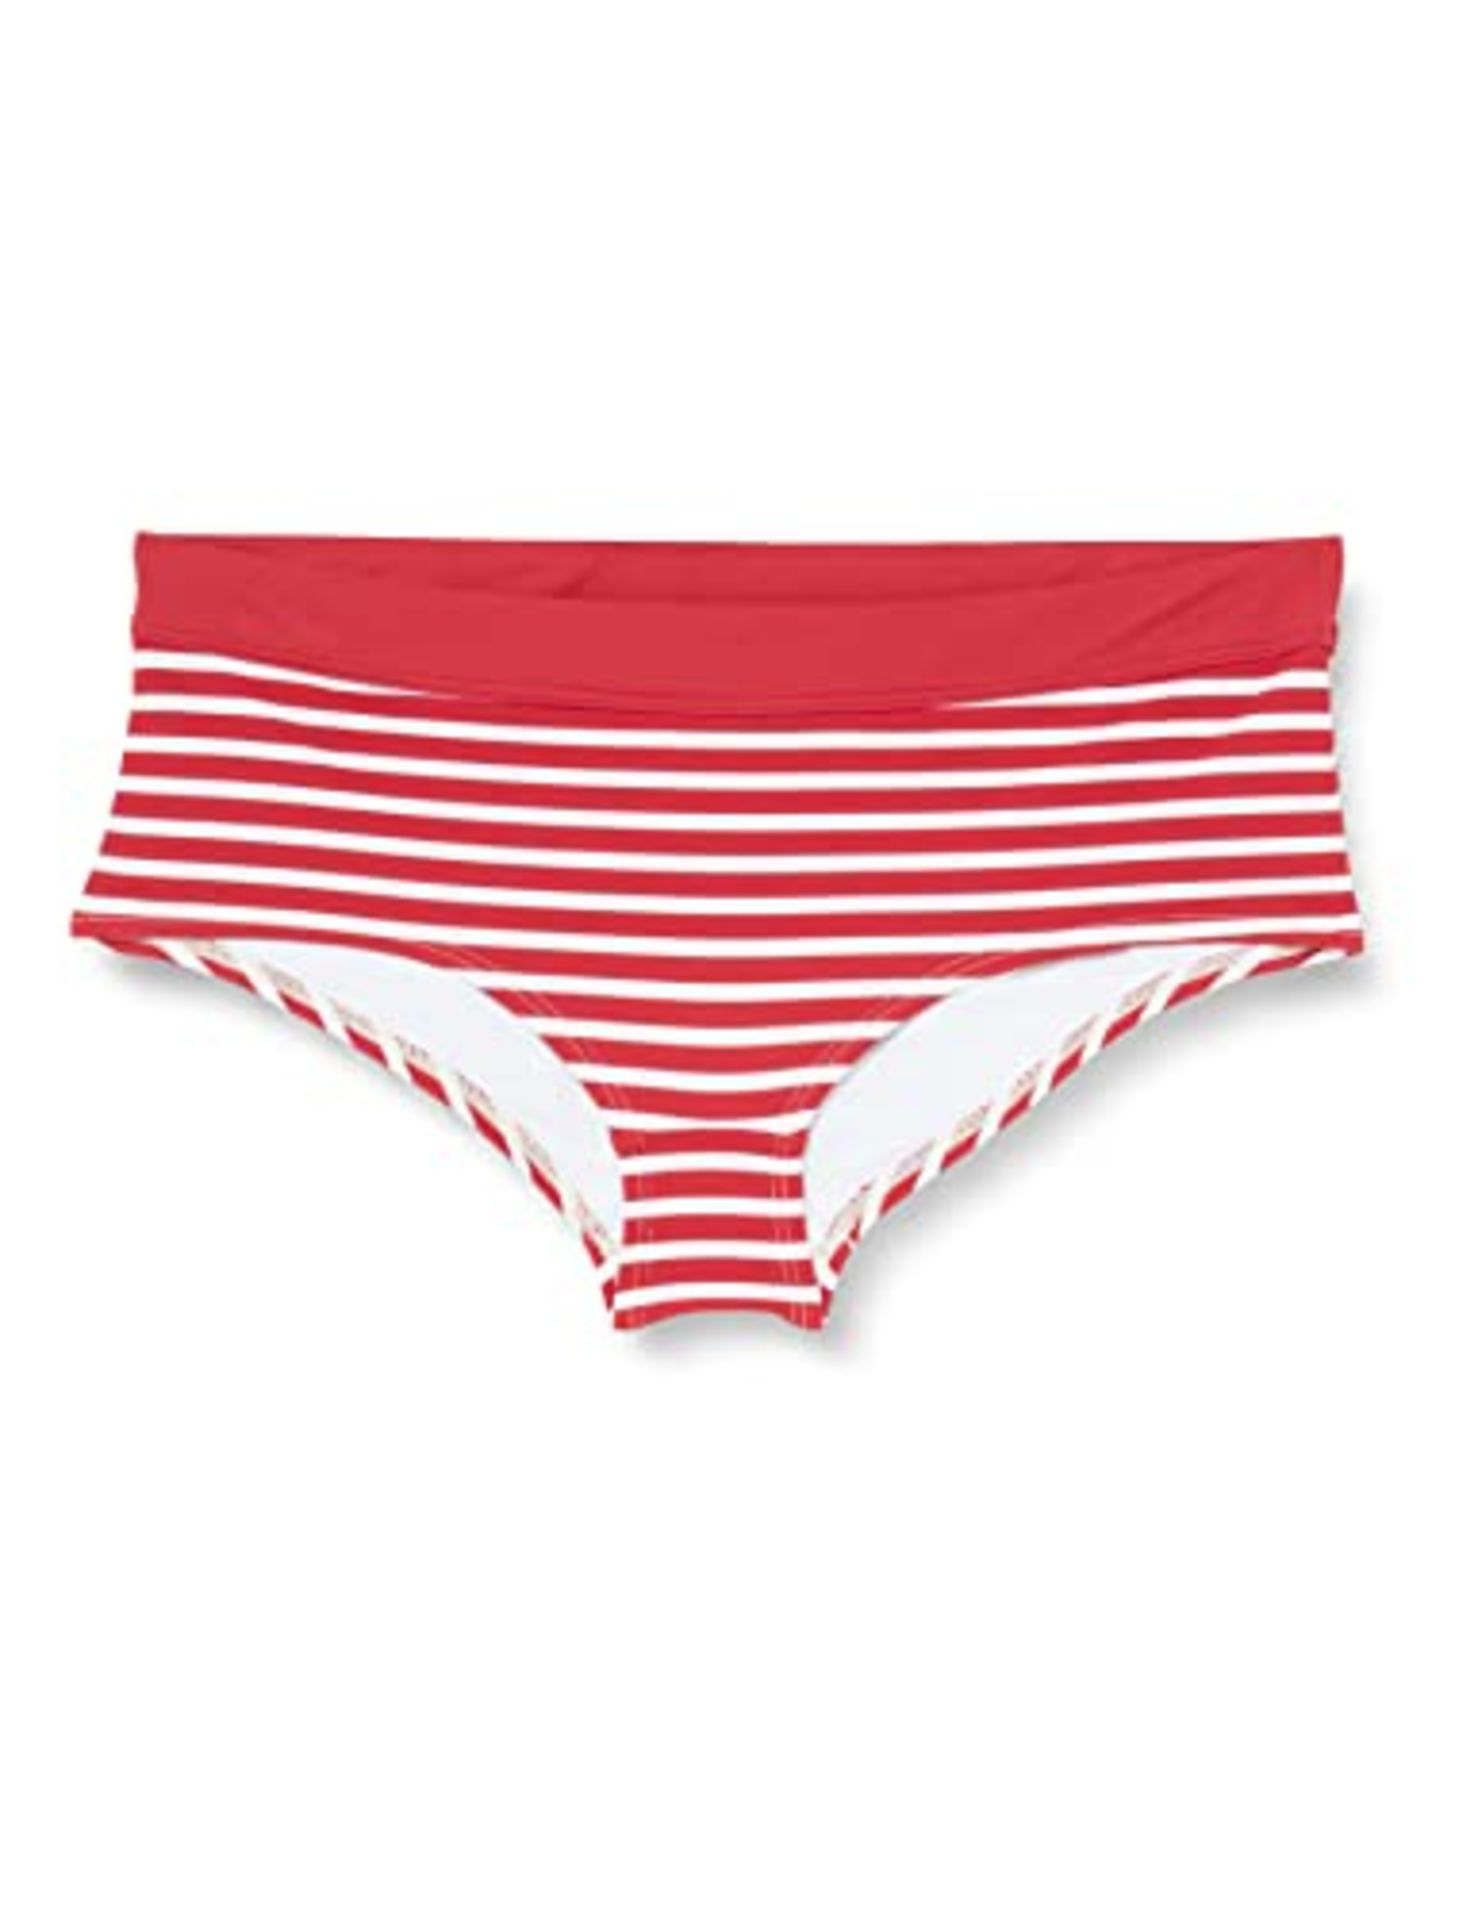 ESPRIT Bodywear Women's Hamptons Beach RCS Hip.Shorts Bikini Bottoms, Red, 16 UK